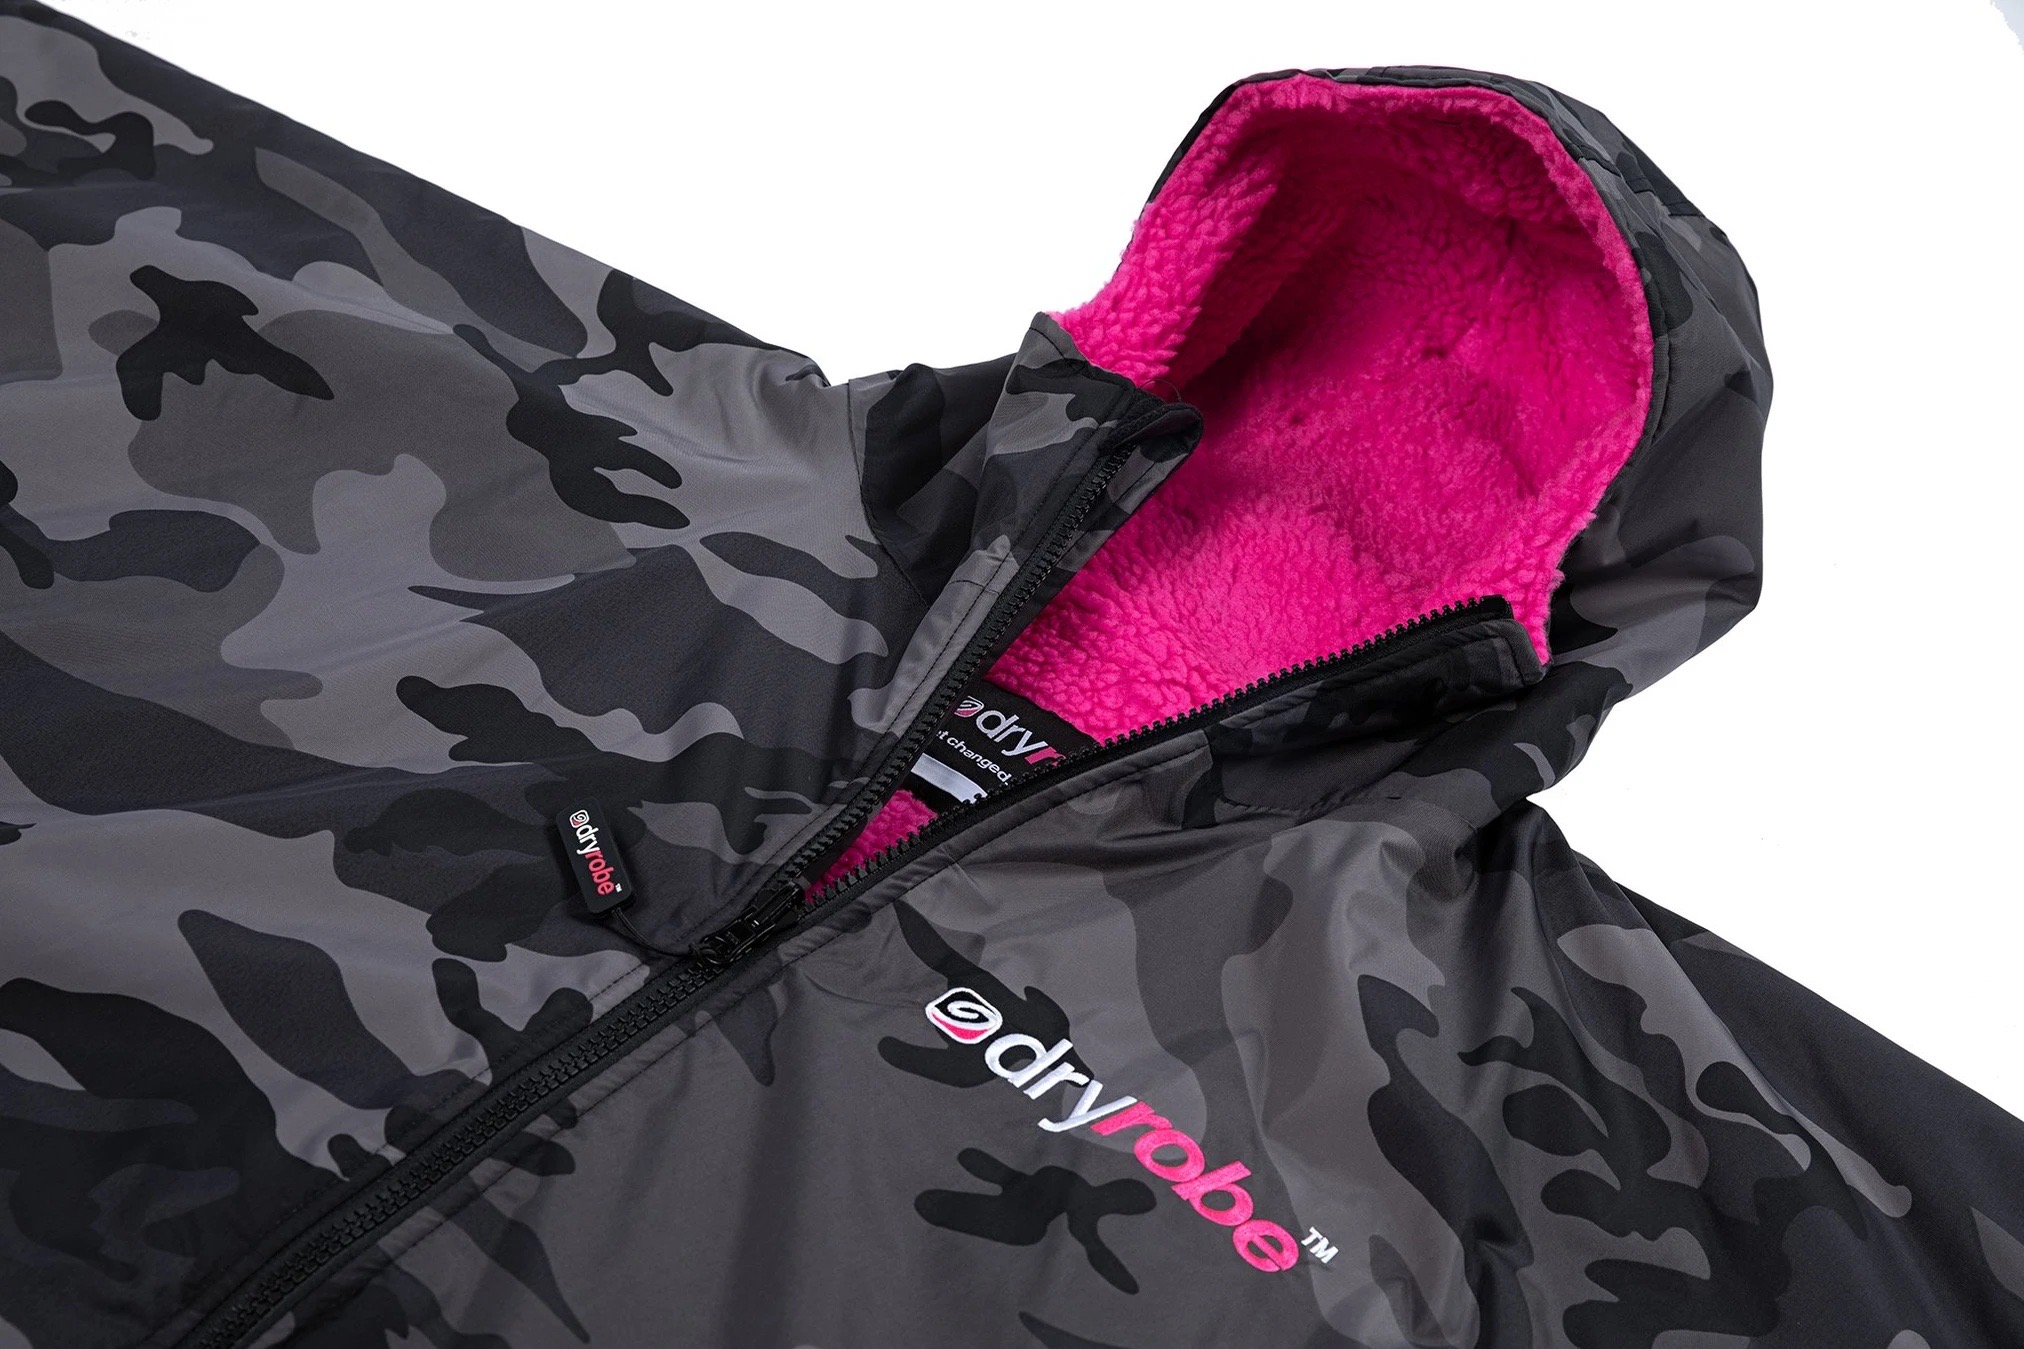 Dryrobe Advance Long Sleeve - Black Camo Pink - RECYCLED